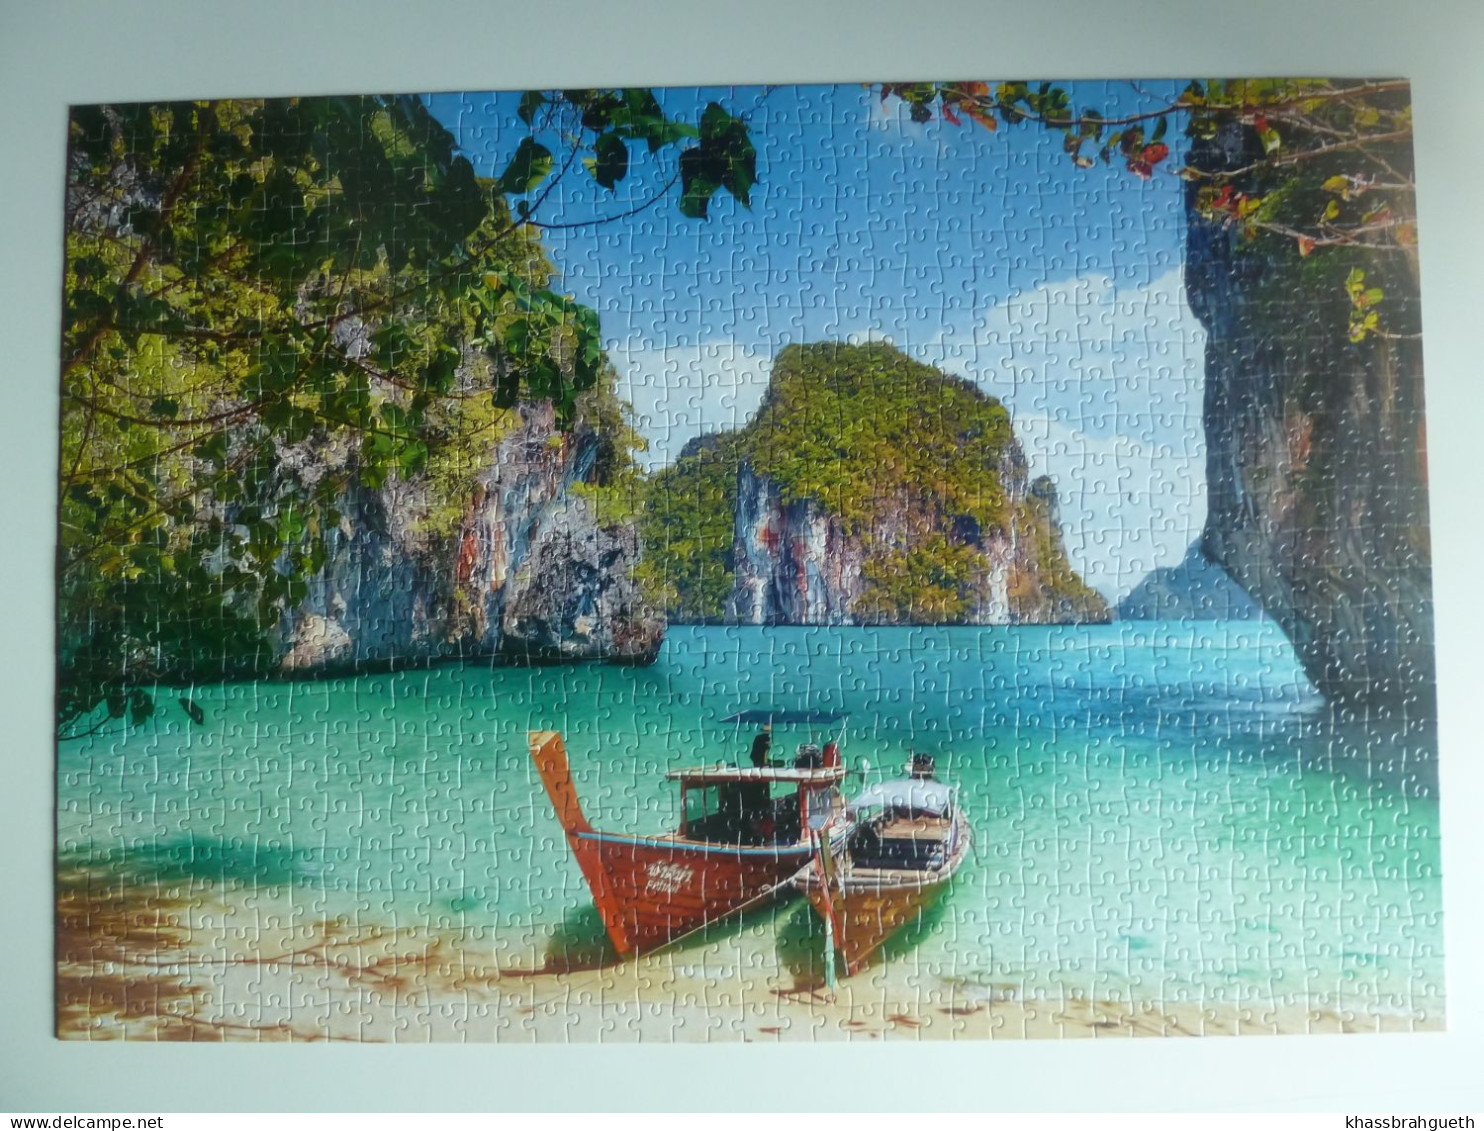 PUZZLE CASTORLAND (1000 P) - KHO-PHI-PHI (THAILANDE) - Puzzles